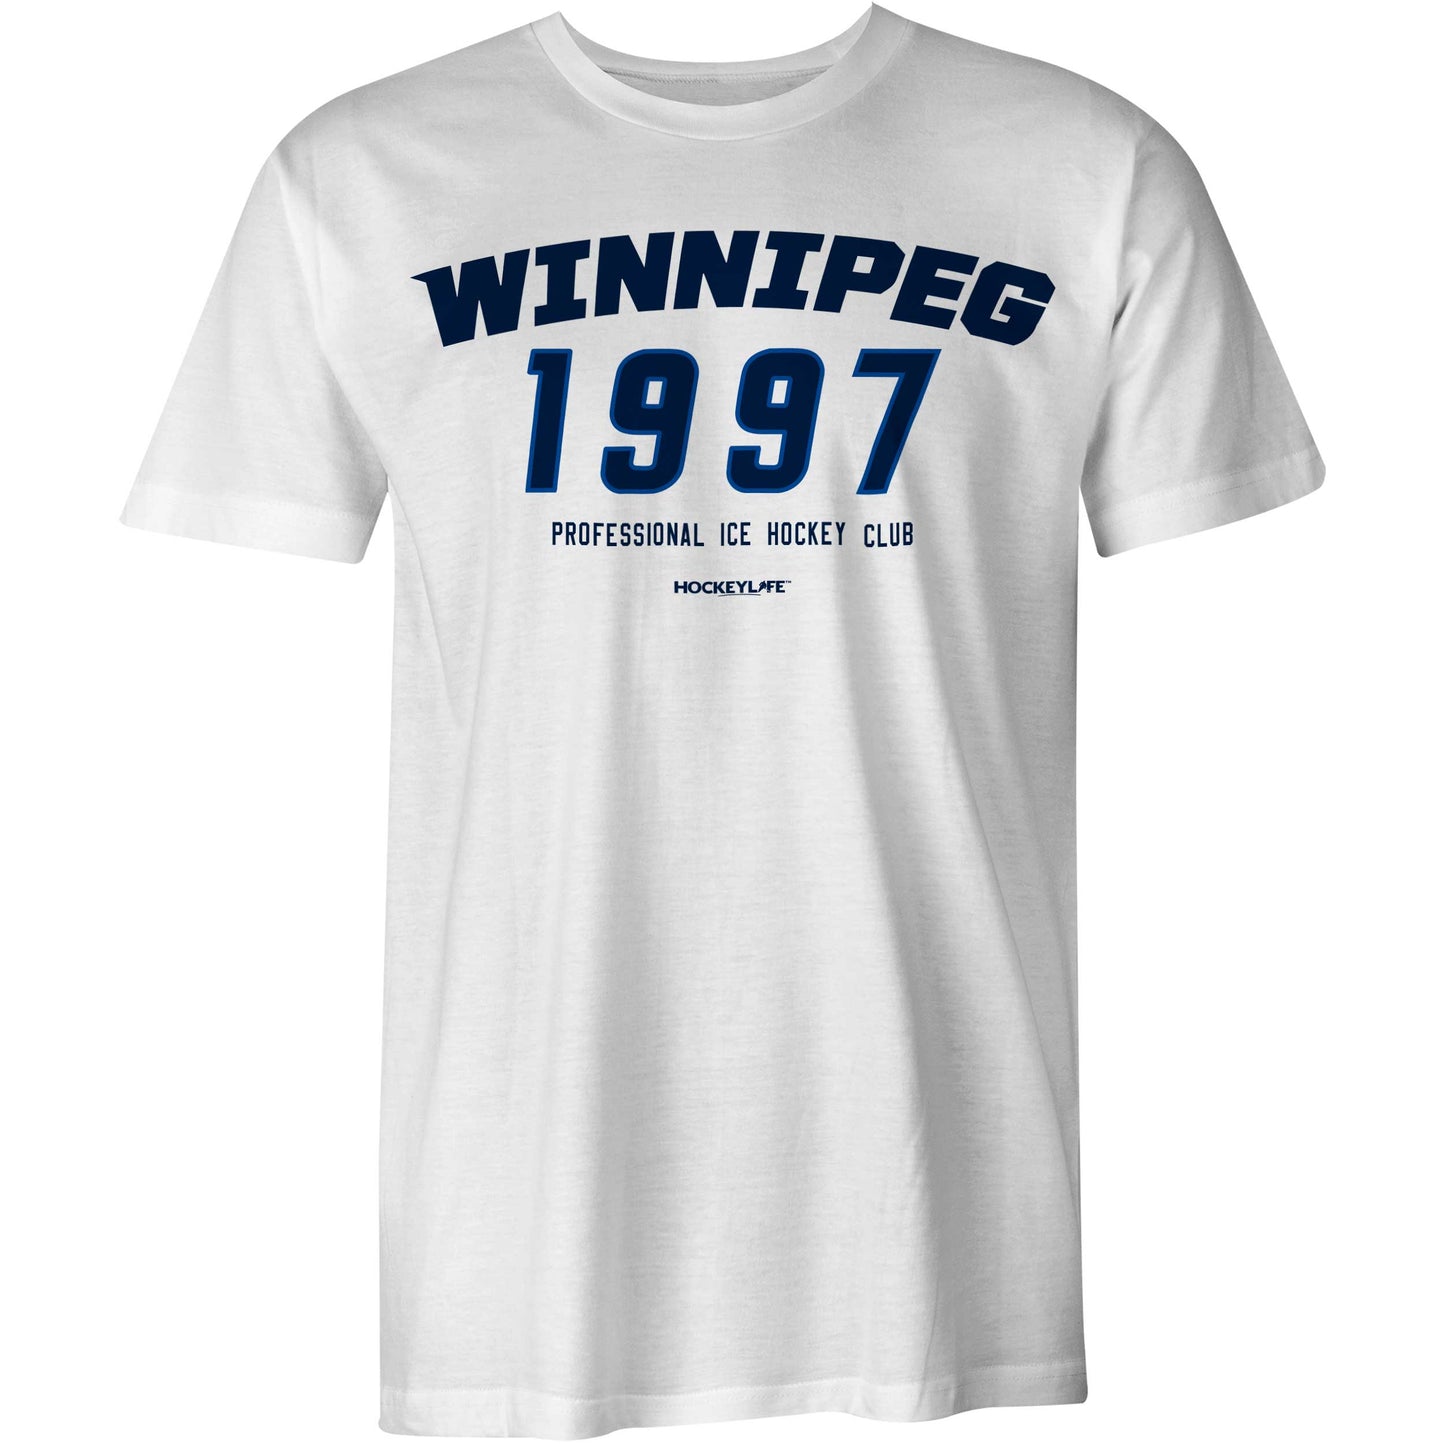 Winnipeg Professional Hockey Club Tee Shirt (White)